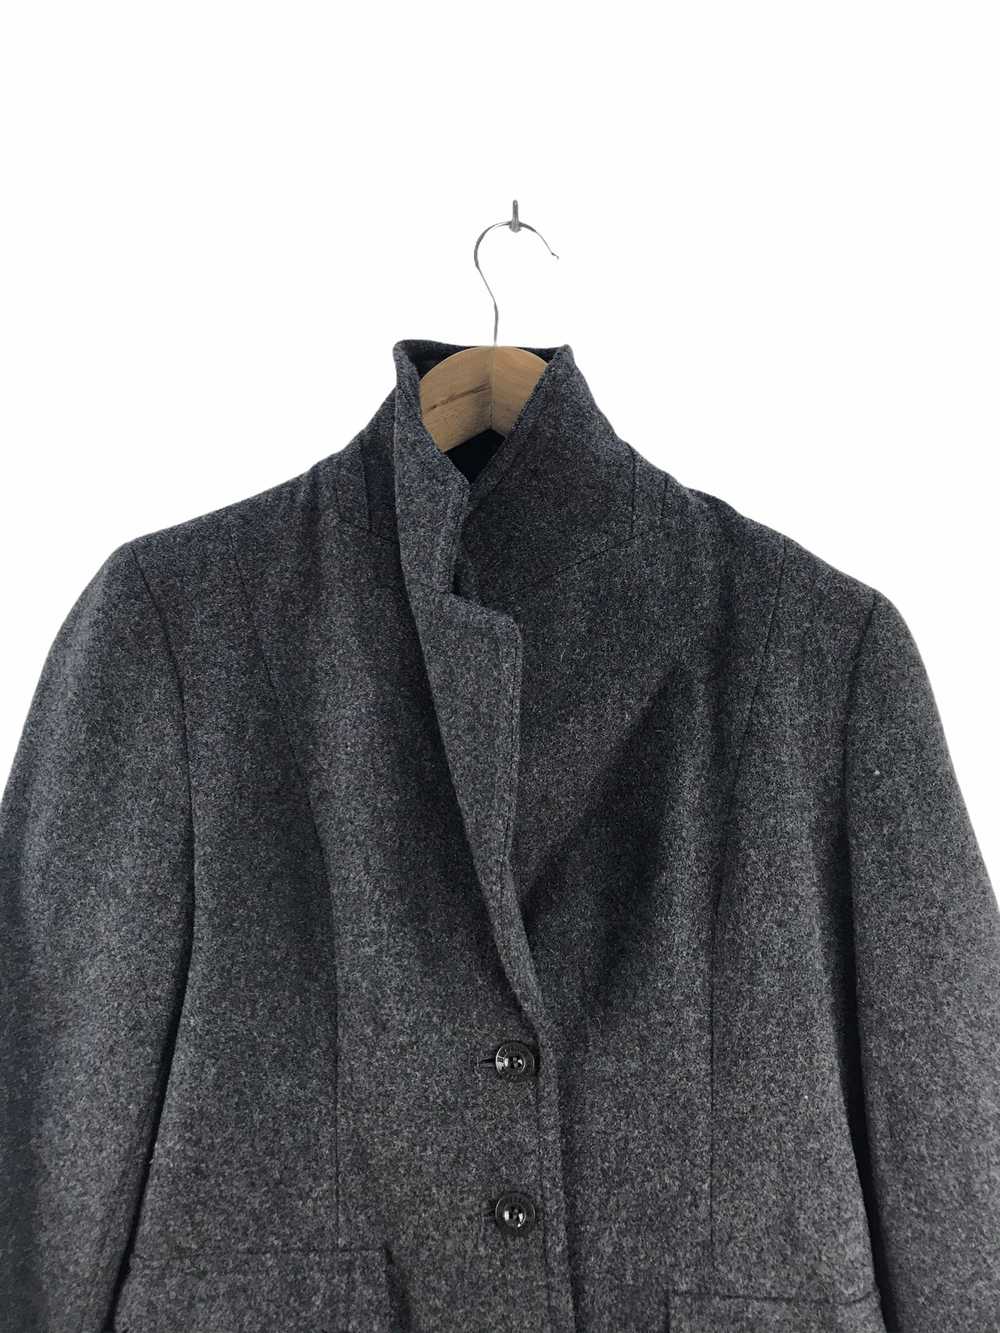 Burberry Blue Label Wool Jacket - image 4